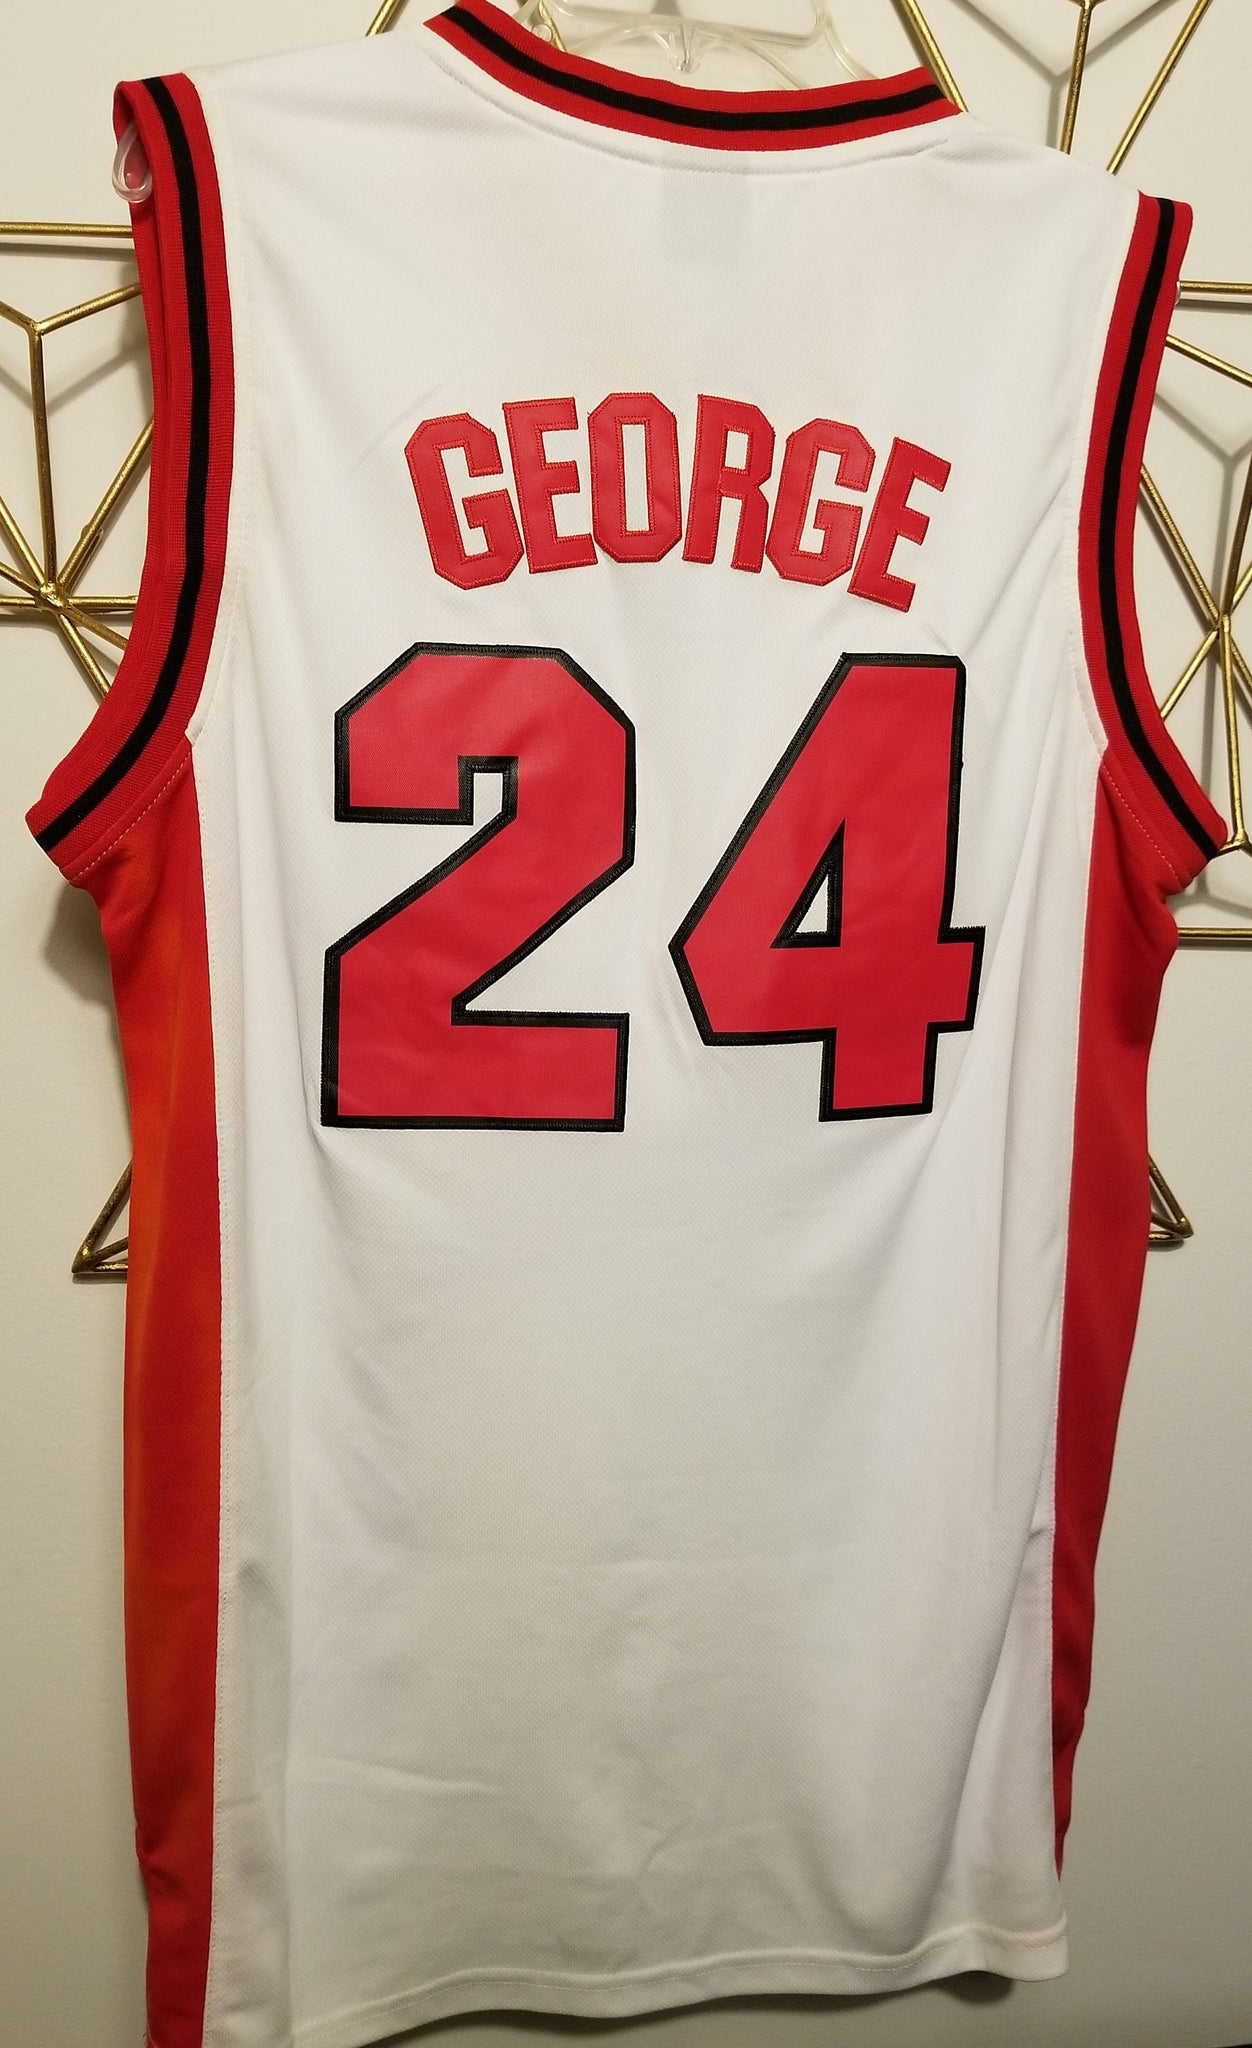 Paul George Jerseys, Paul George Shirts, Basketball Apparel, Paul